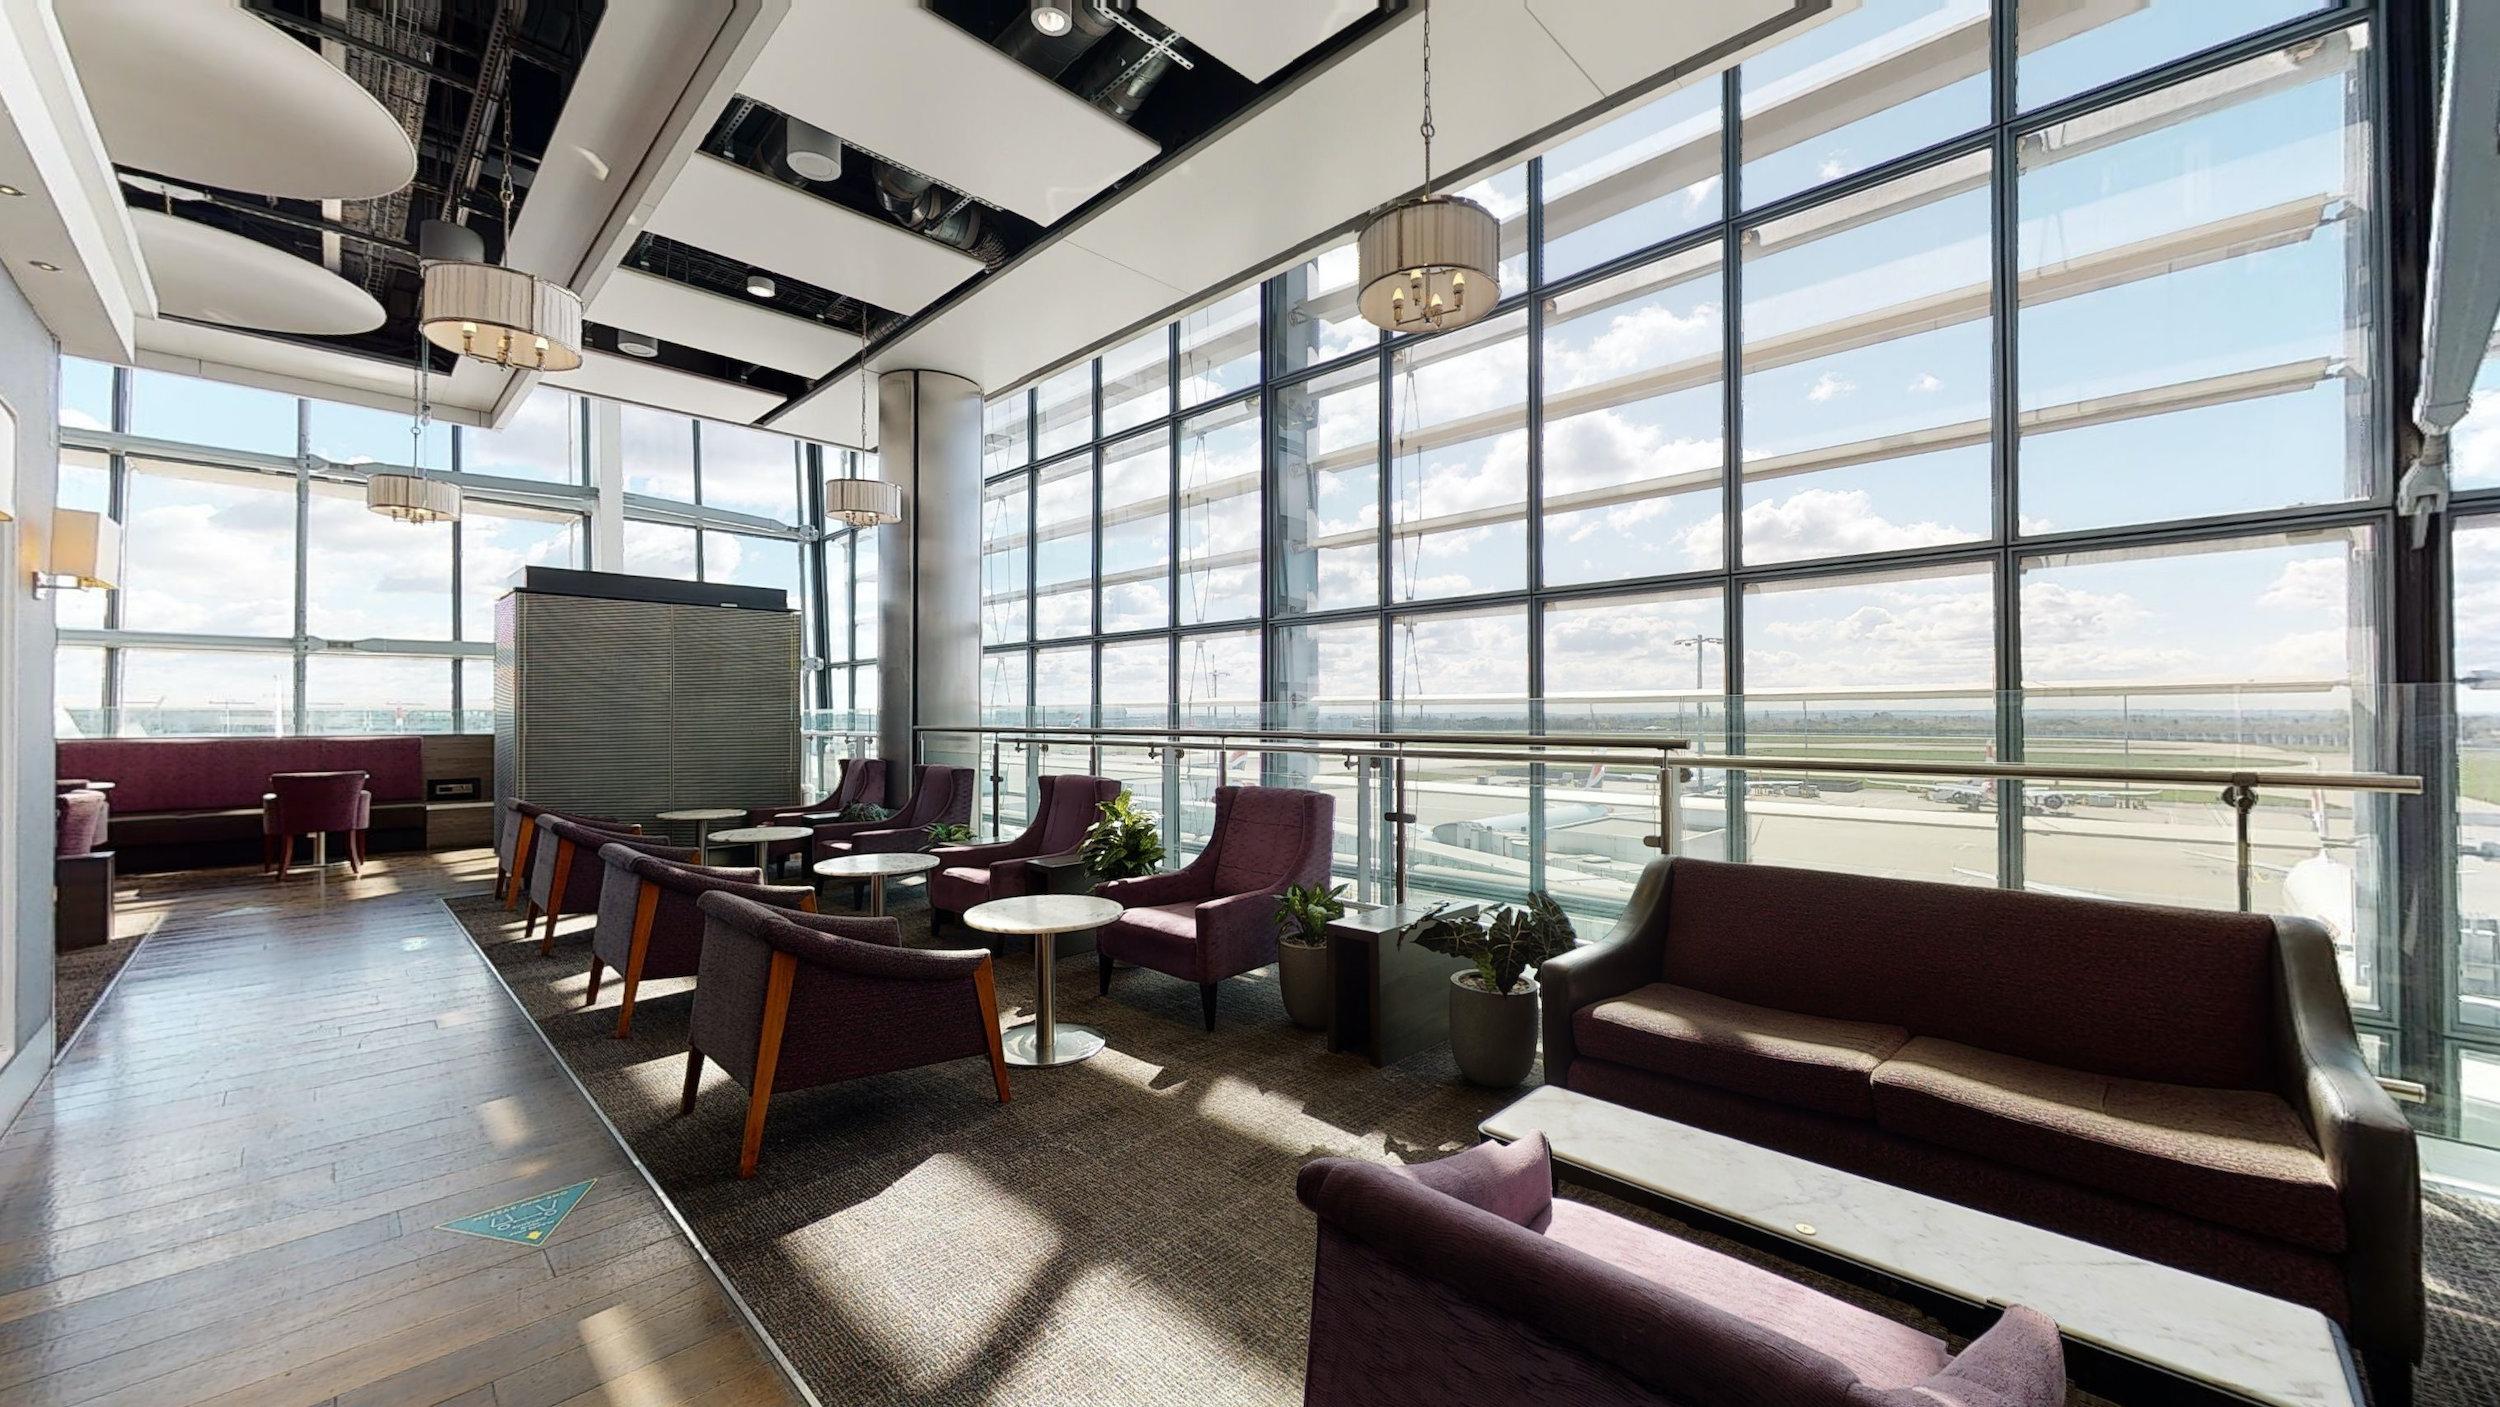 Club Aspire Heathrow Airport T5 Lounge Seating